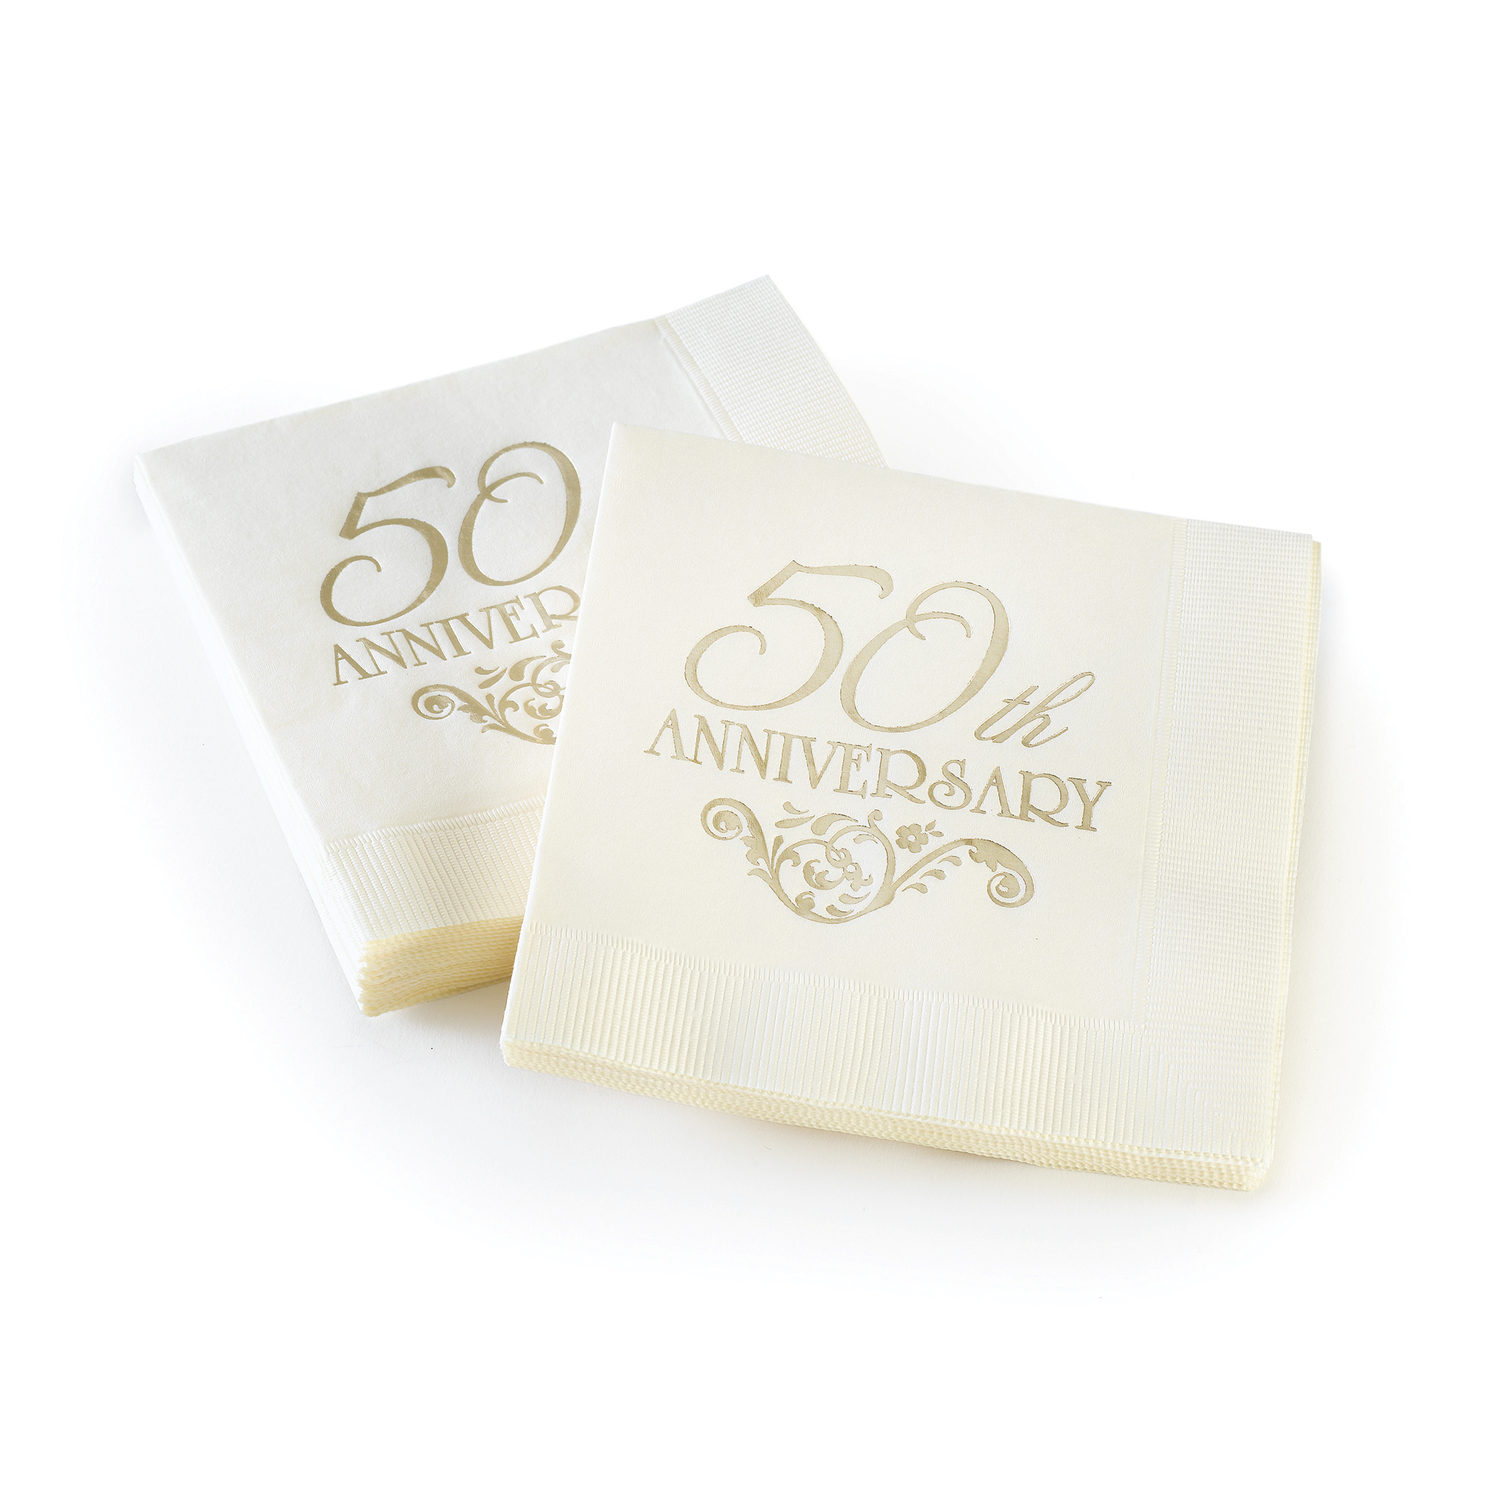 50th anniversary wedding napkins